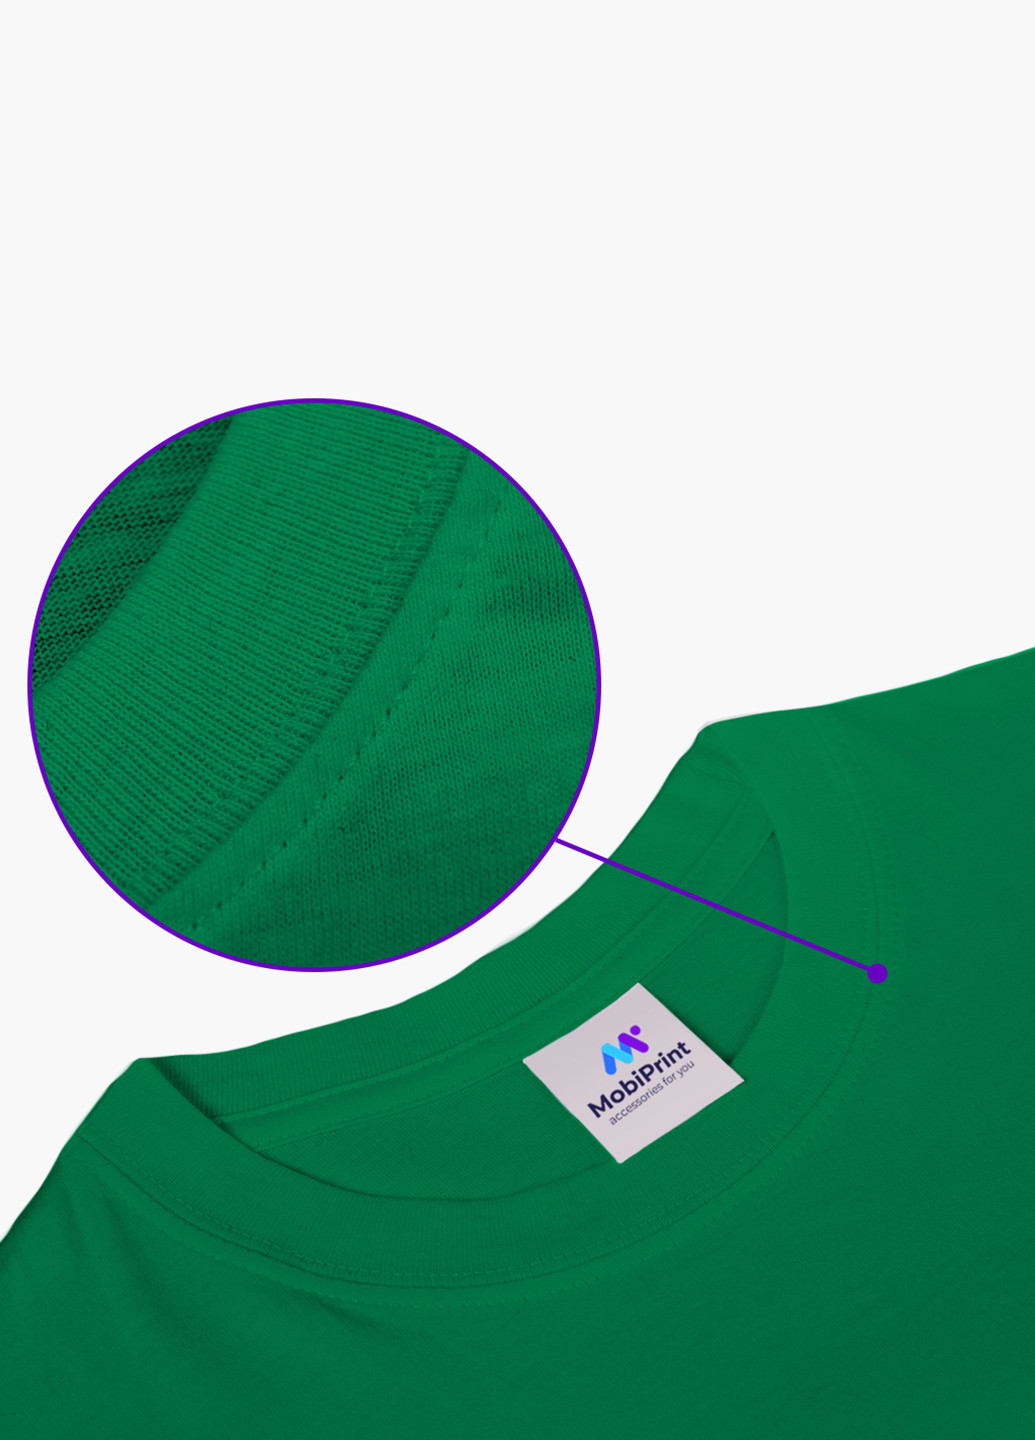 Зеленая демисезонная футболка детская лайк единорог (likee unicorn)(9224-1037) MobiPrint